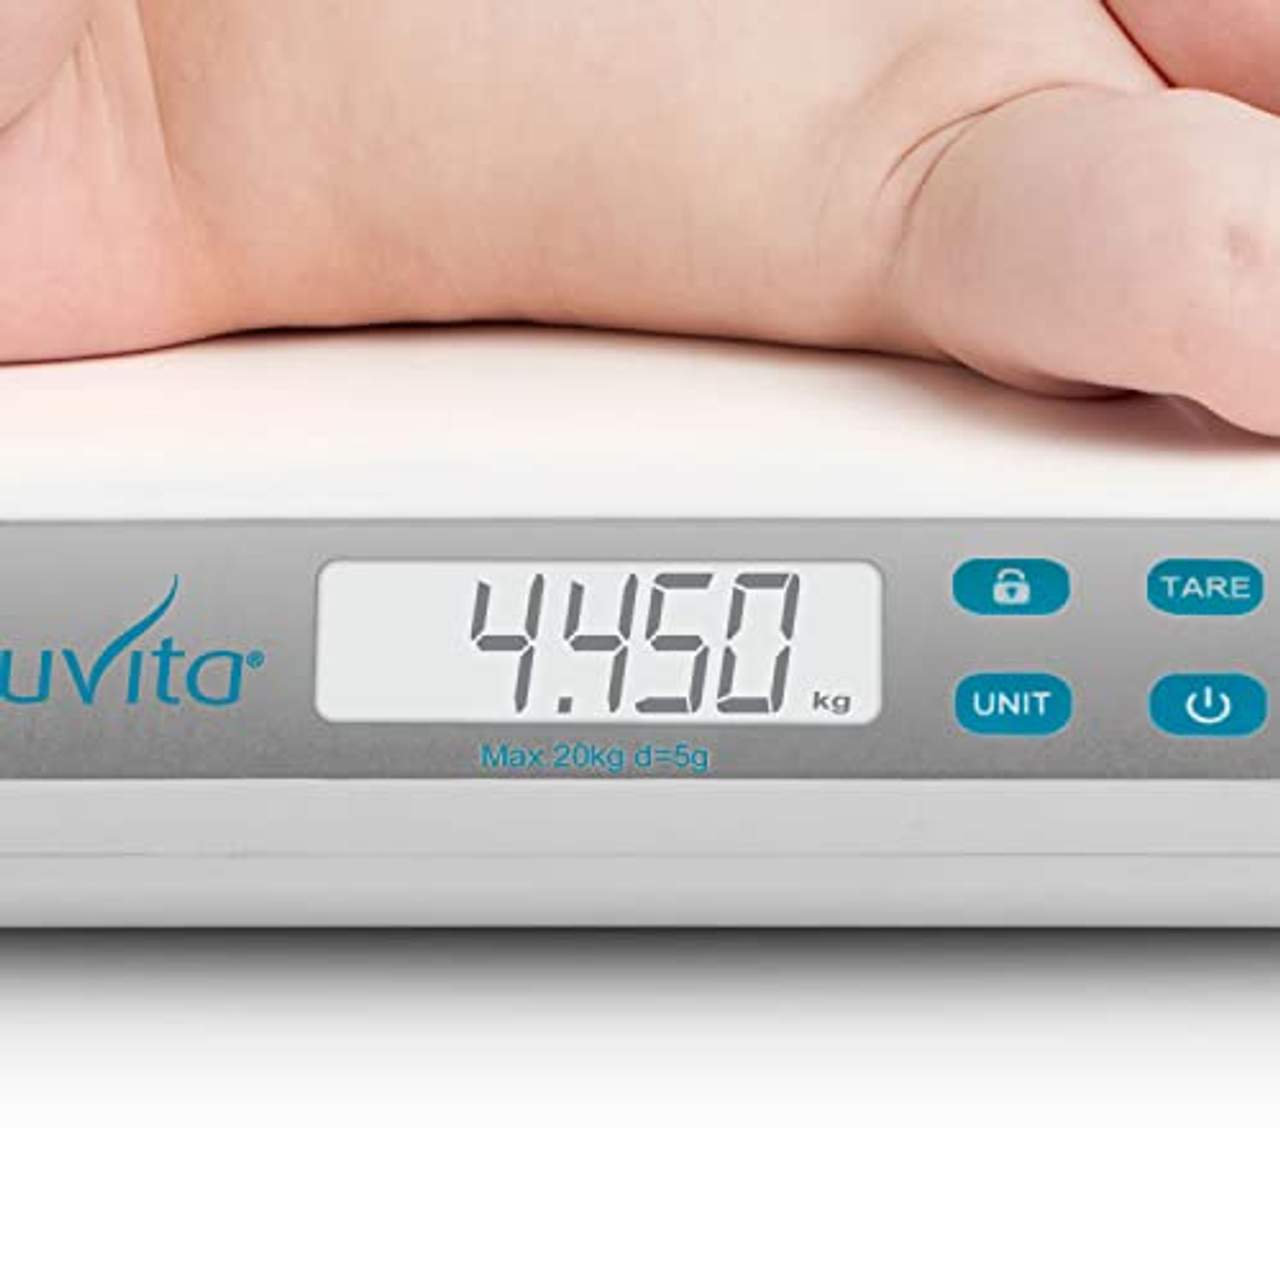 Nuvita 1310 Elektronische Digitale Babywaage Primi Pesi